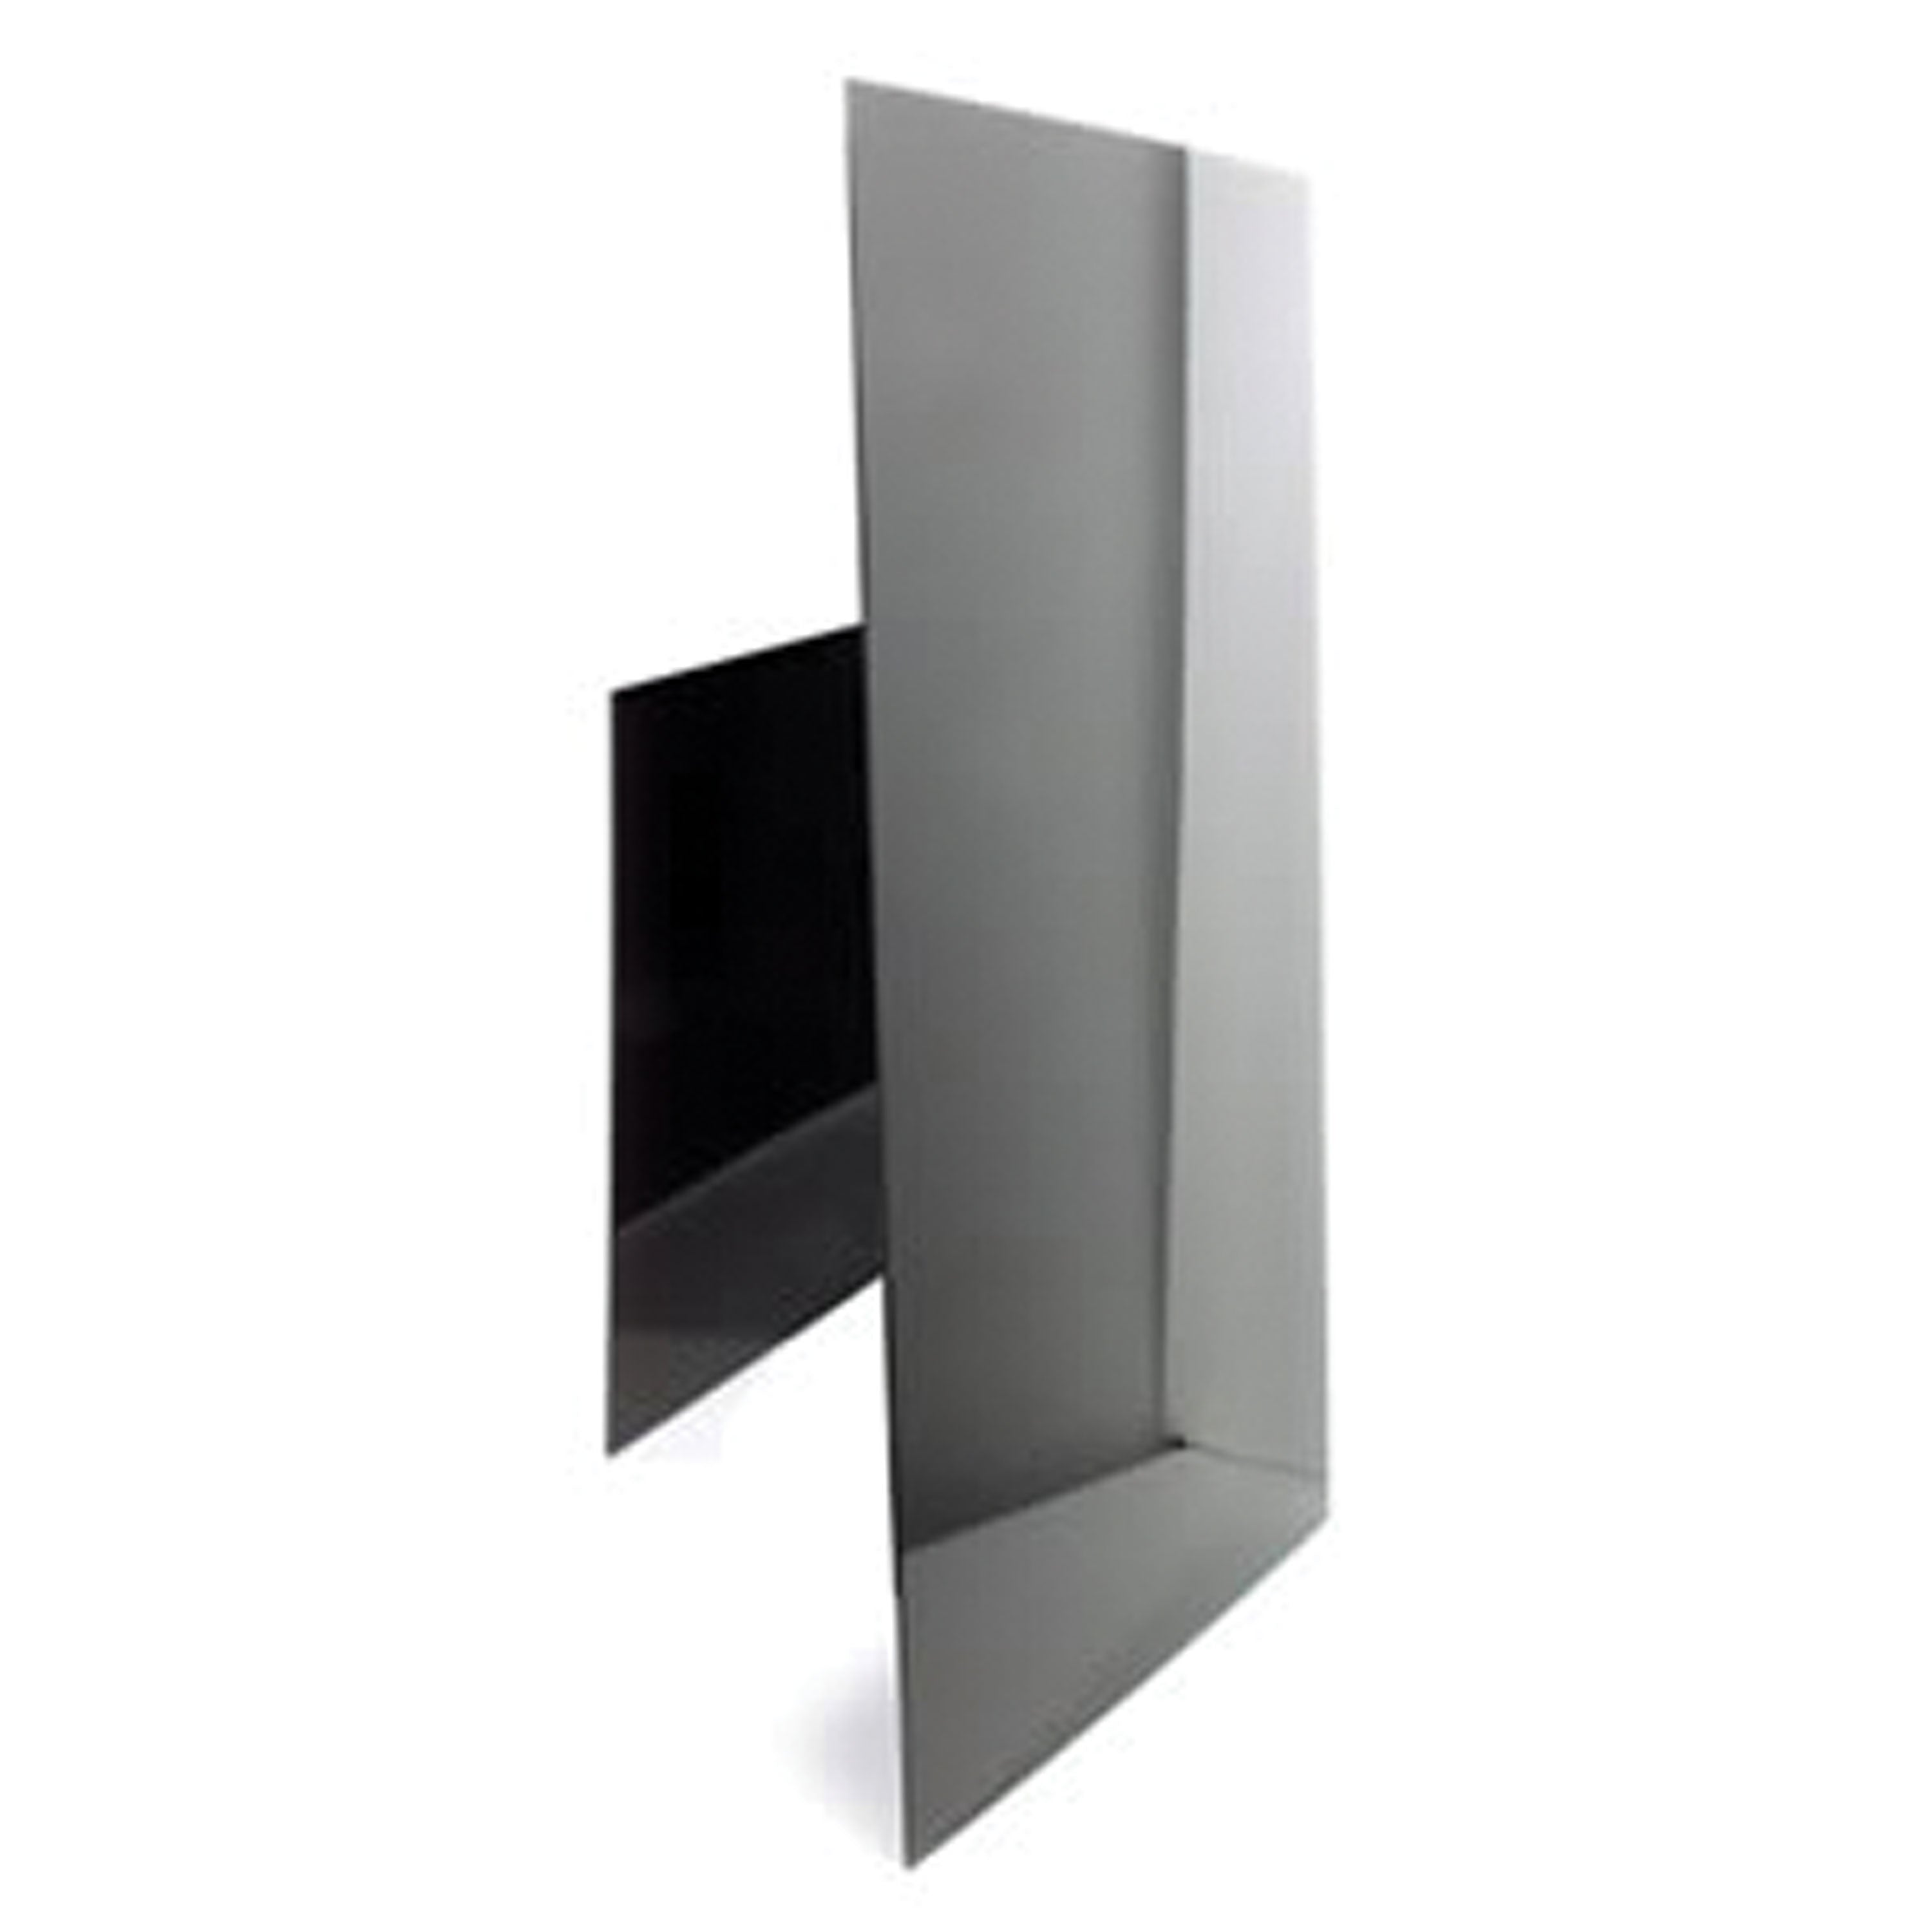 Norcold 636218 Refrigerator Door Panel - Lower, Black Acrylic, Fits NXA841 Models